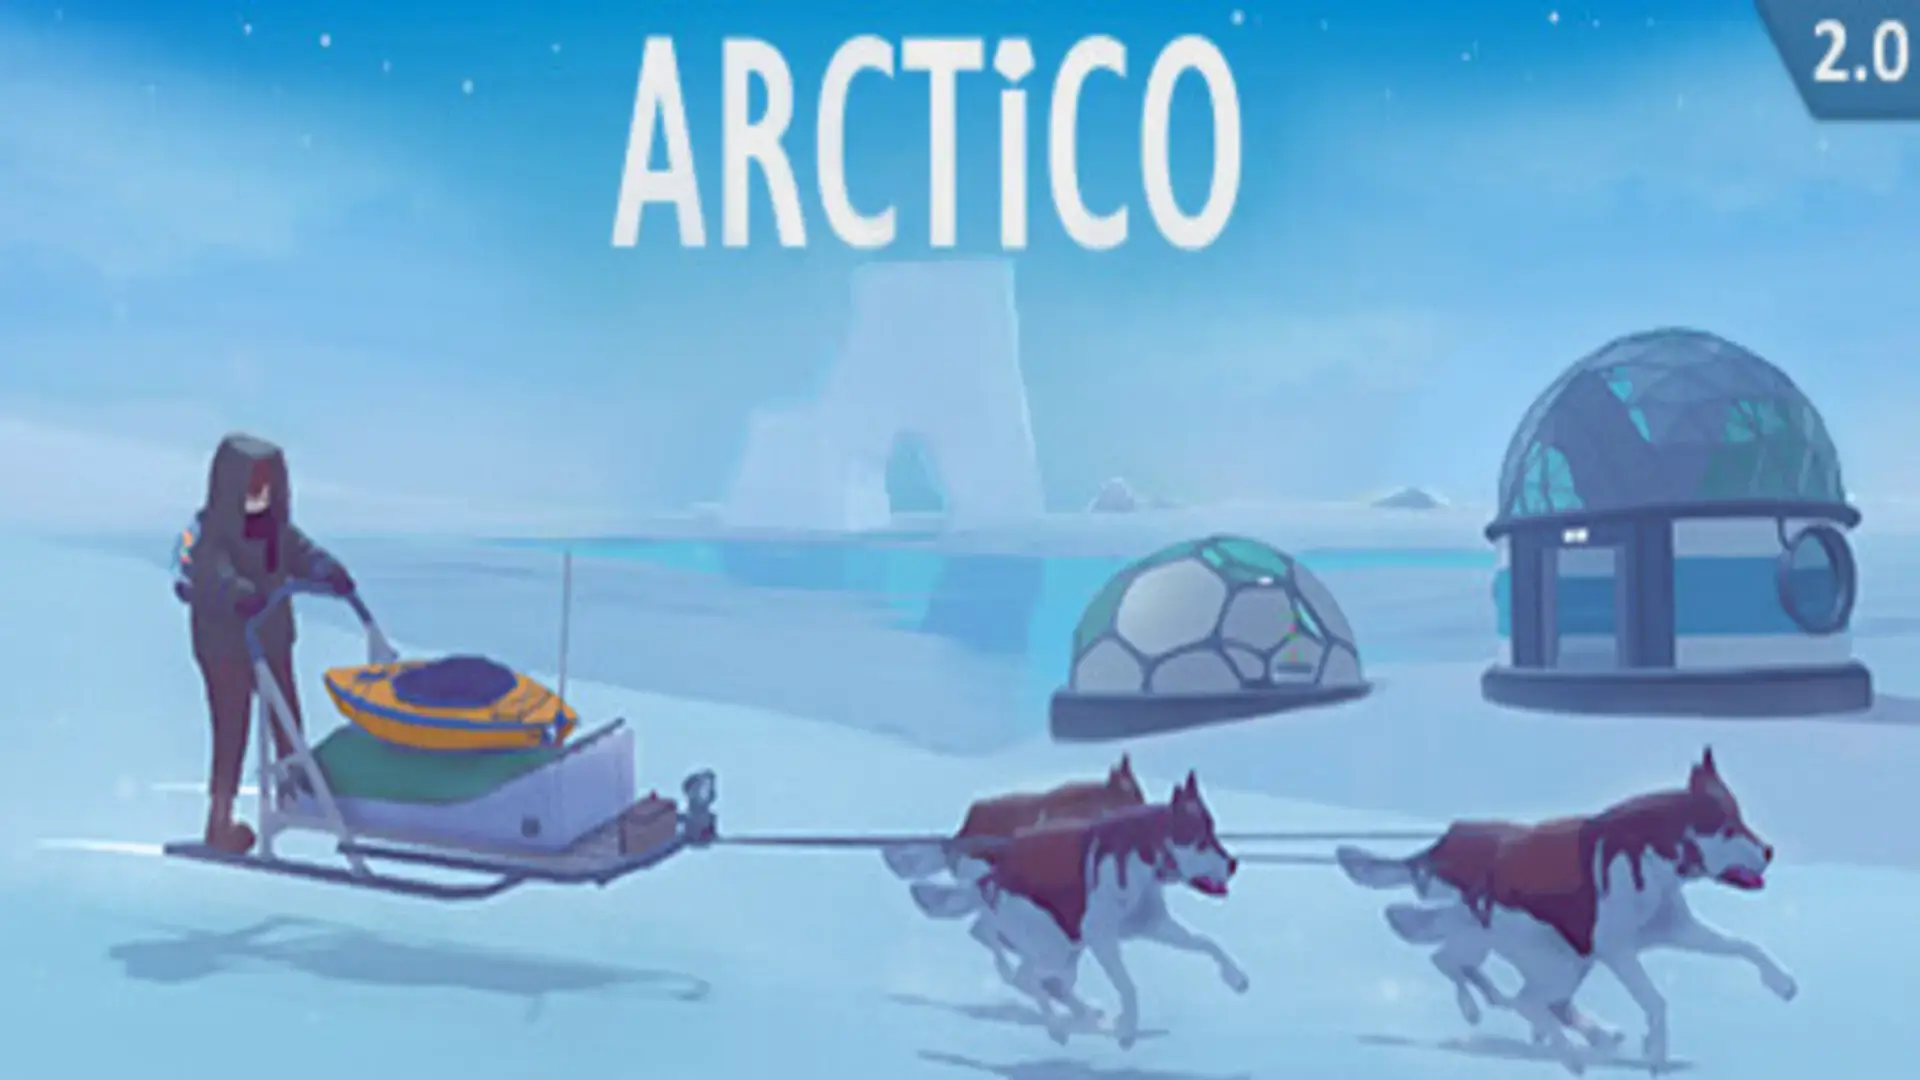 Arctico – Free Download (v2.0)